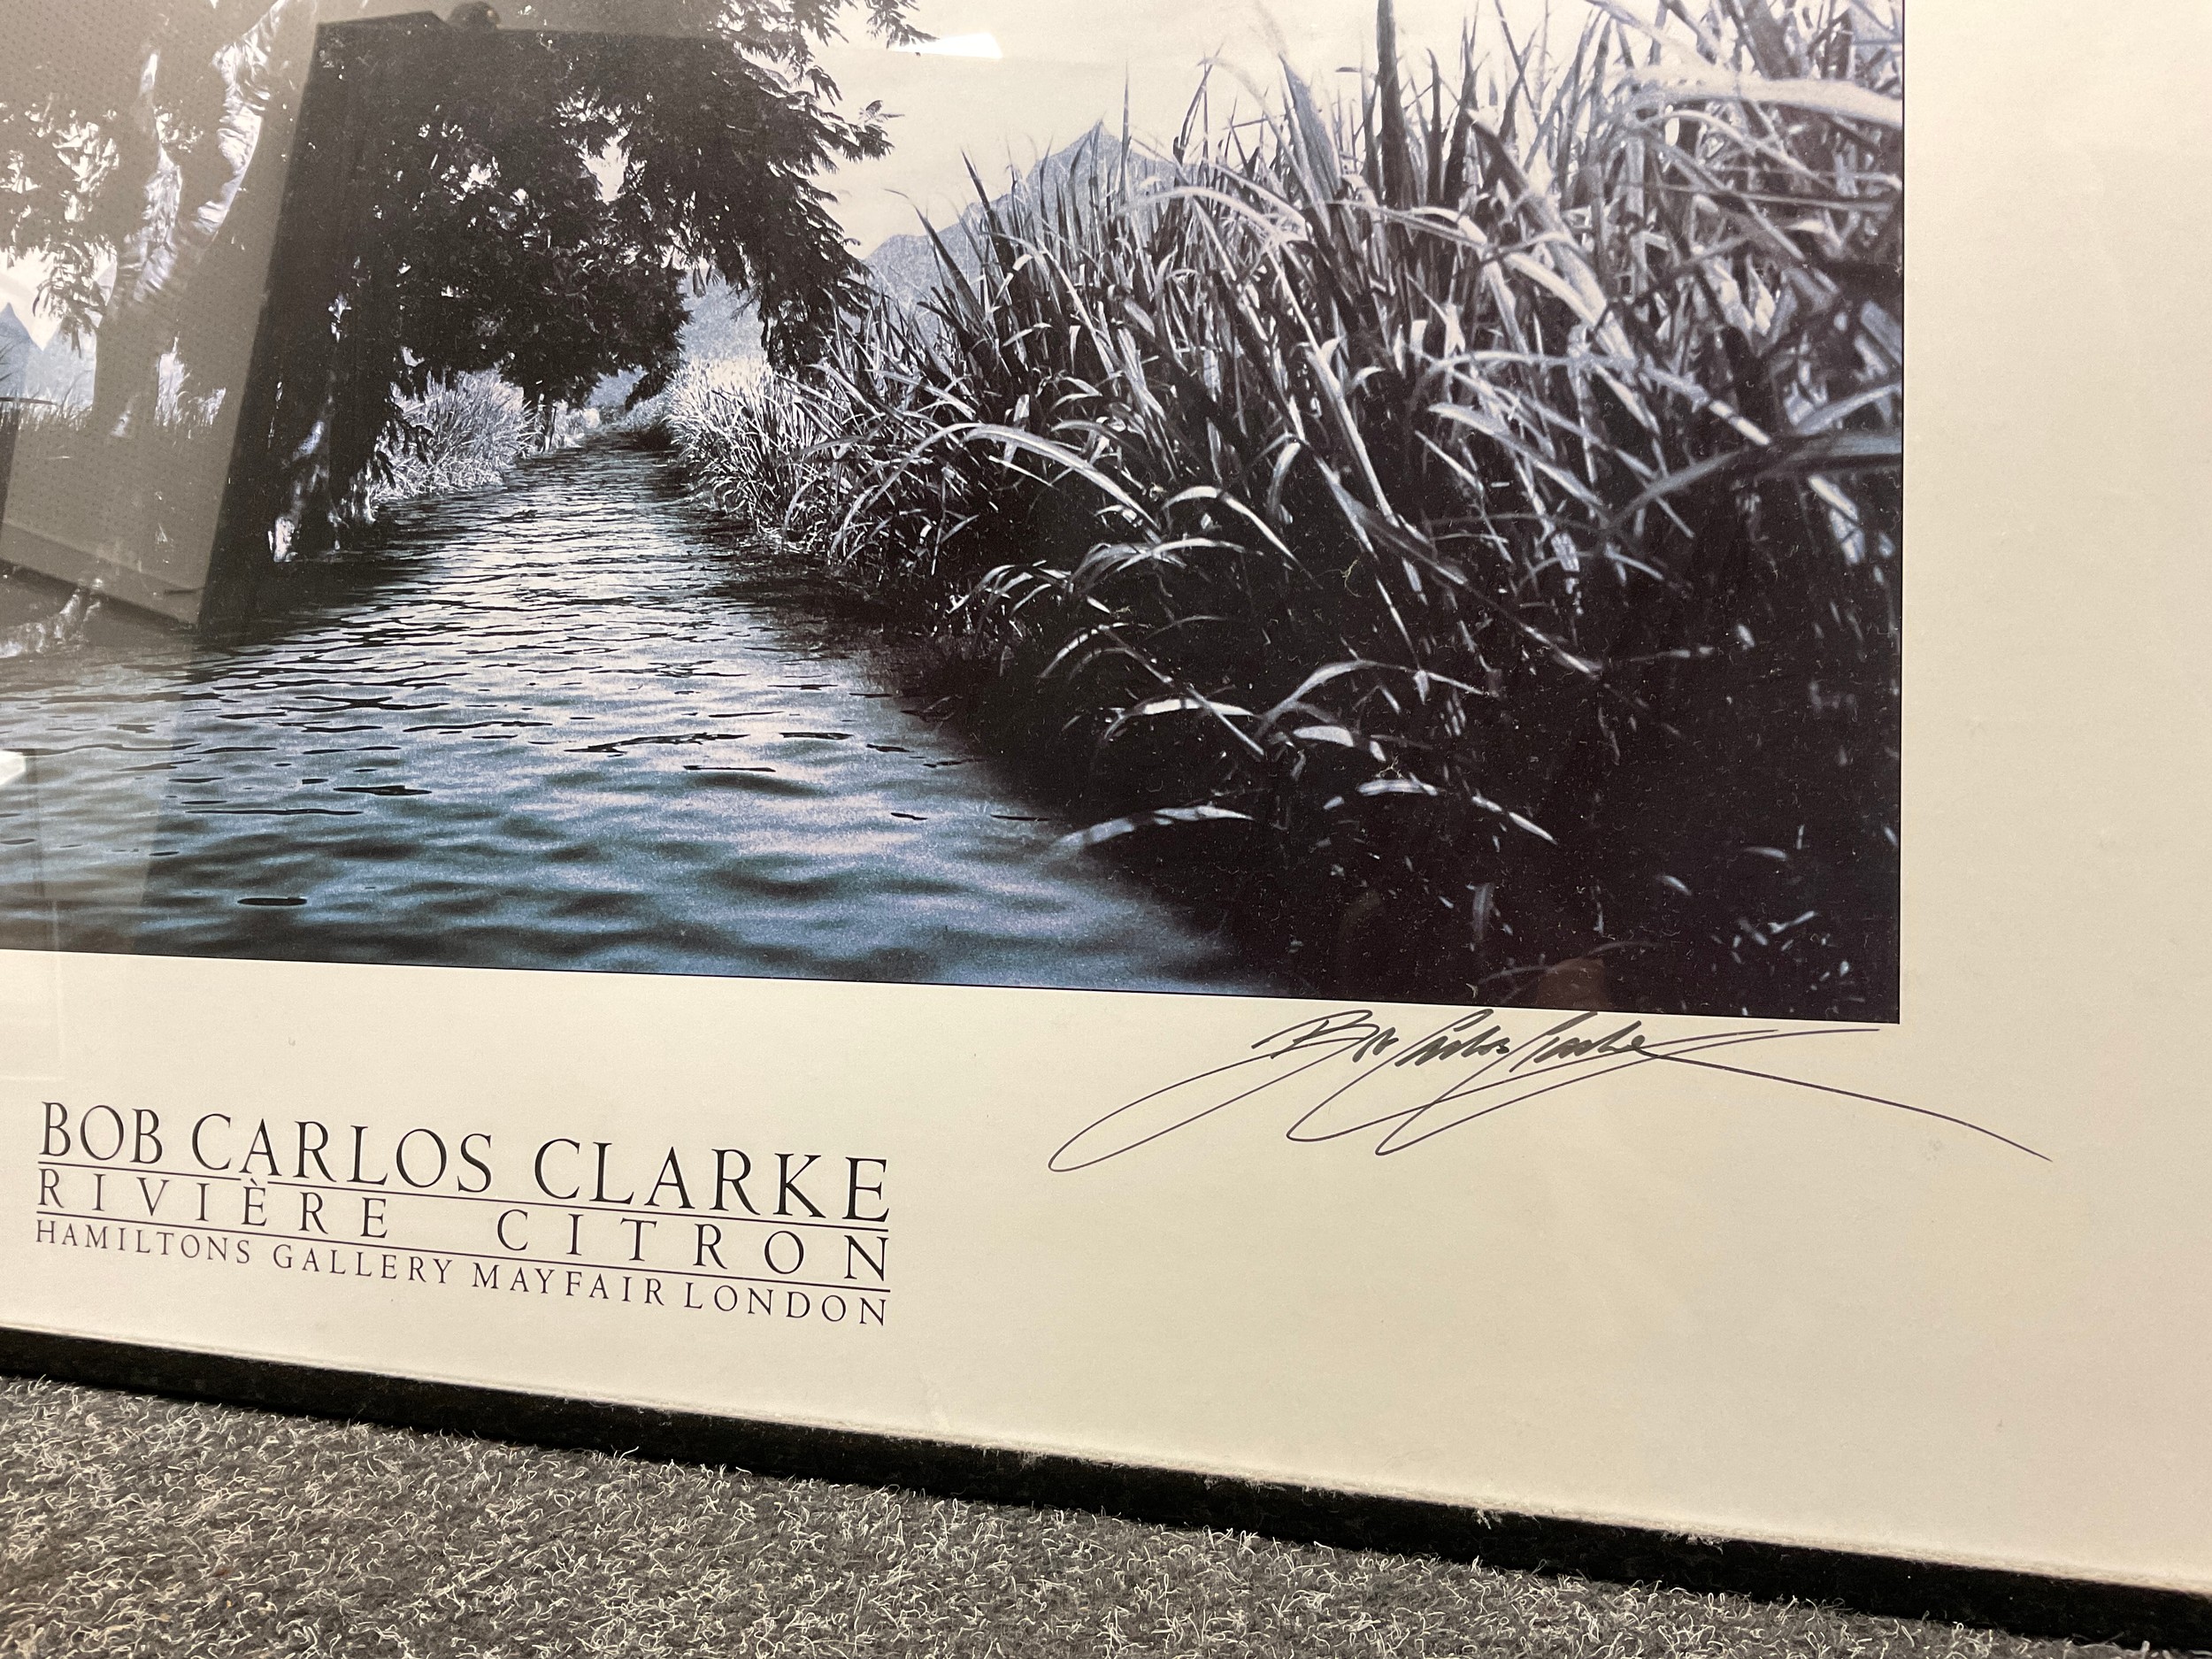 Bob Carlos Clarke (1950-2006), ‘Rivière Citron’, monochrome photographic print, signed lower right - Bild 2 aus 2